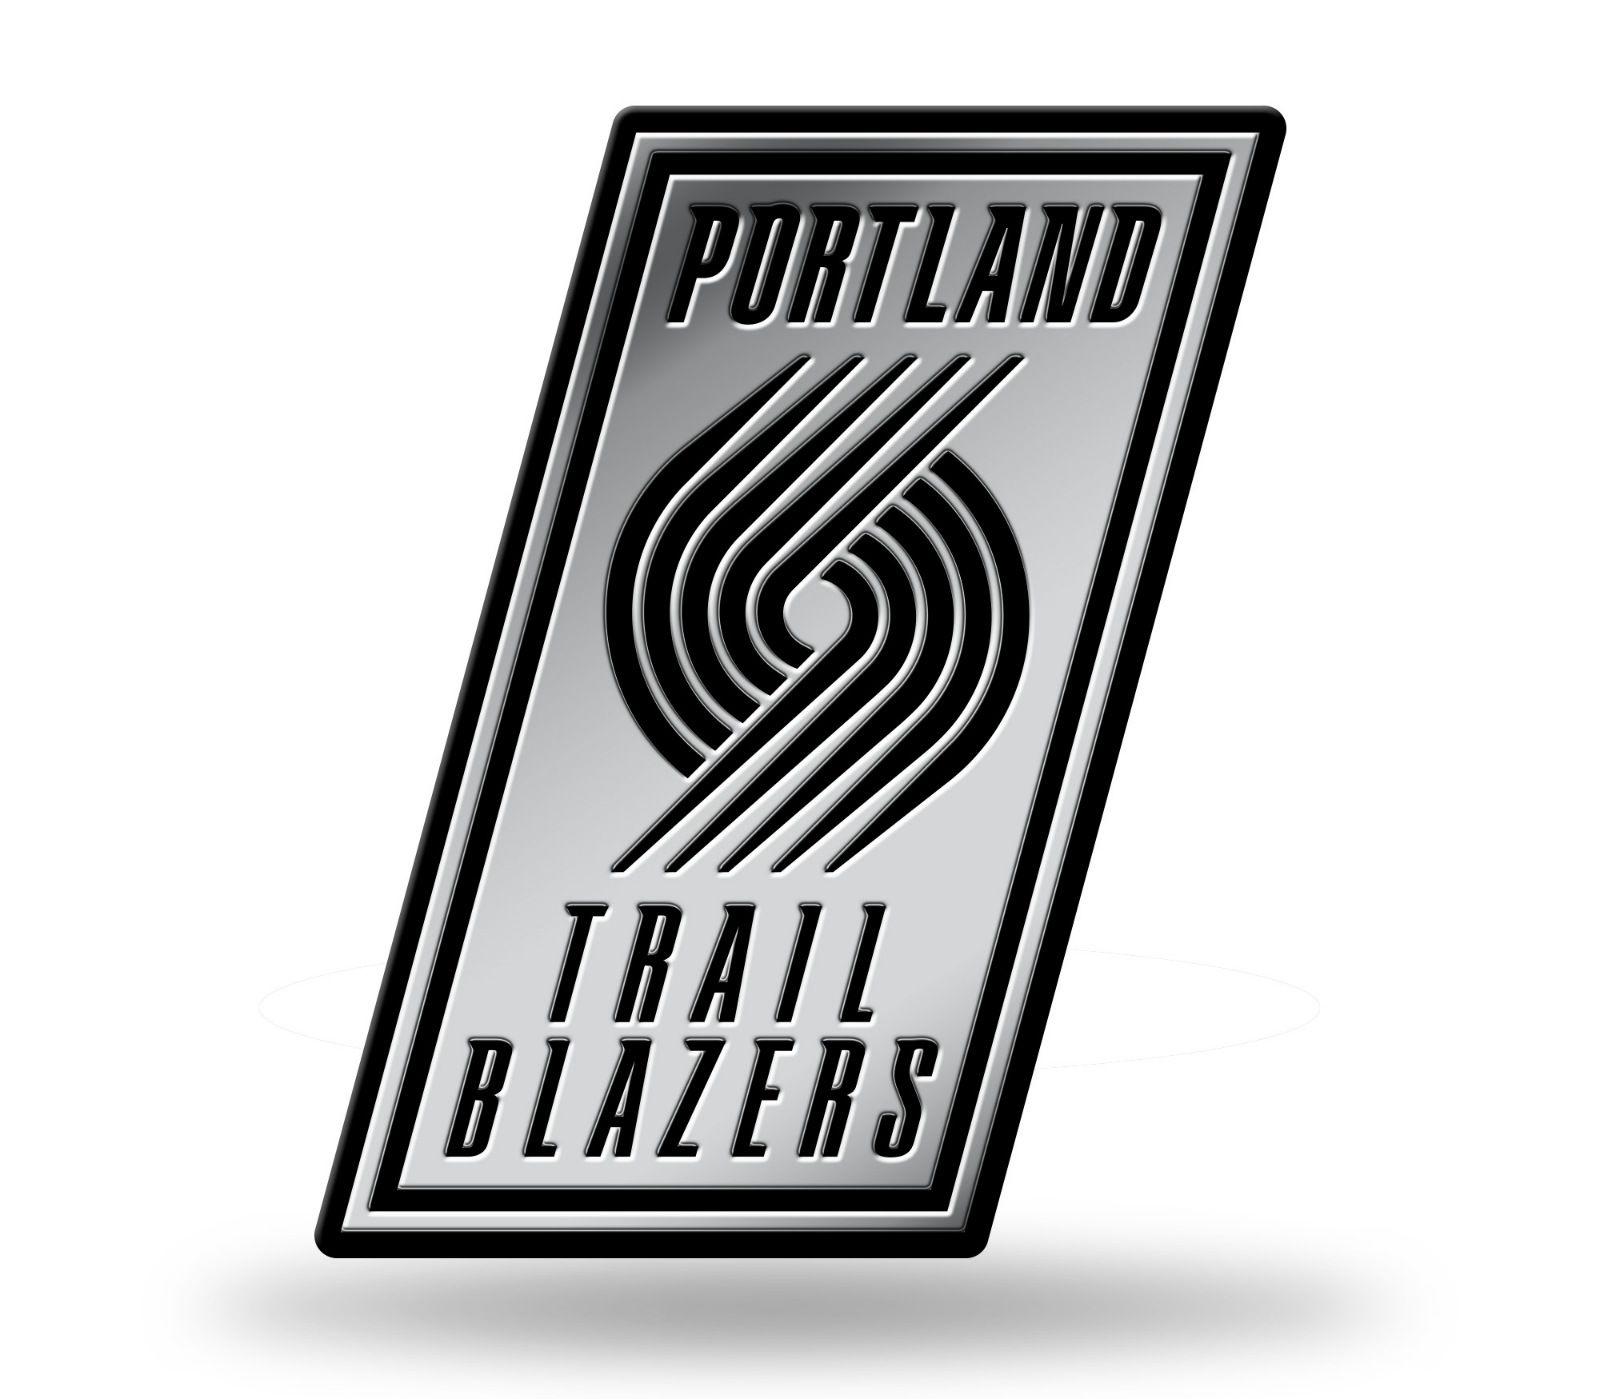 Blazers Logo - Details about Portland Trail Blazers Logo 3D Chrome Auto Decal Sticker NEW  Truck Car Rico